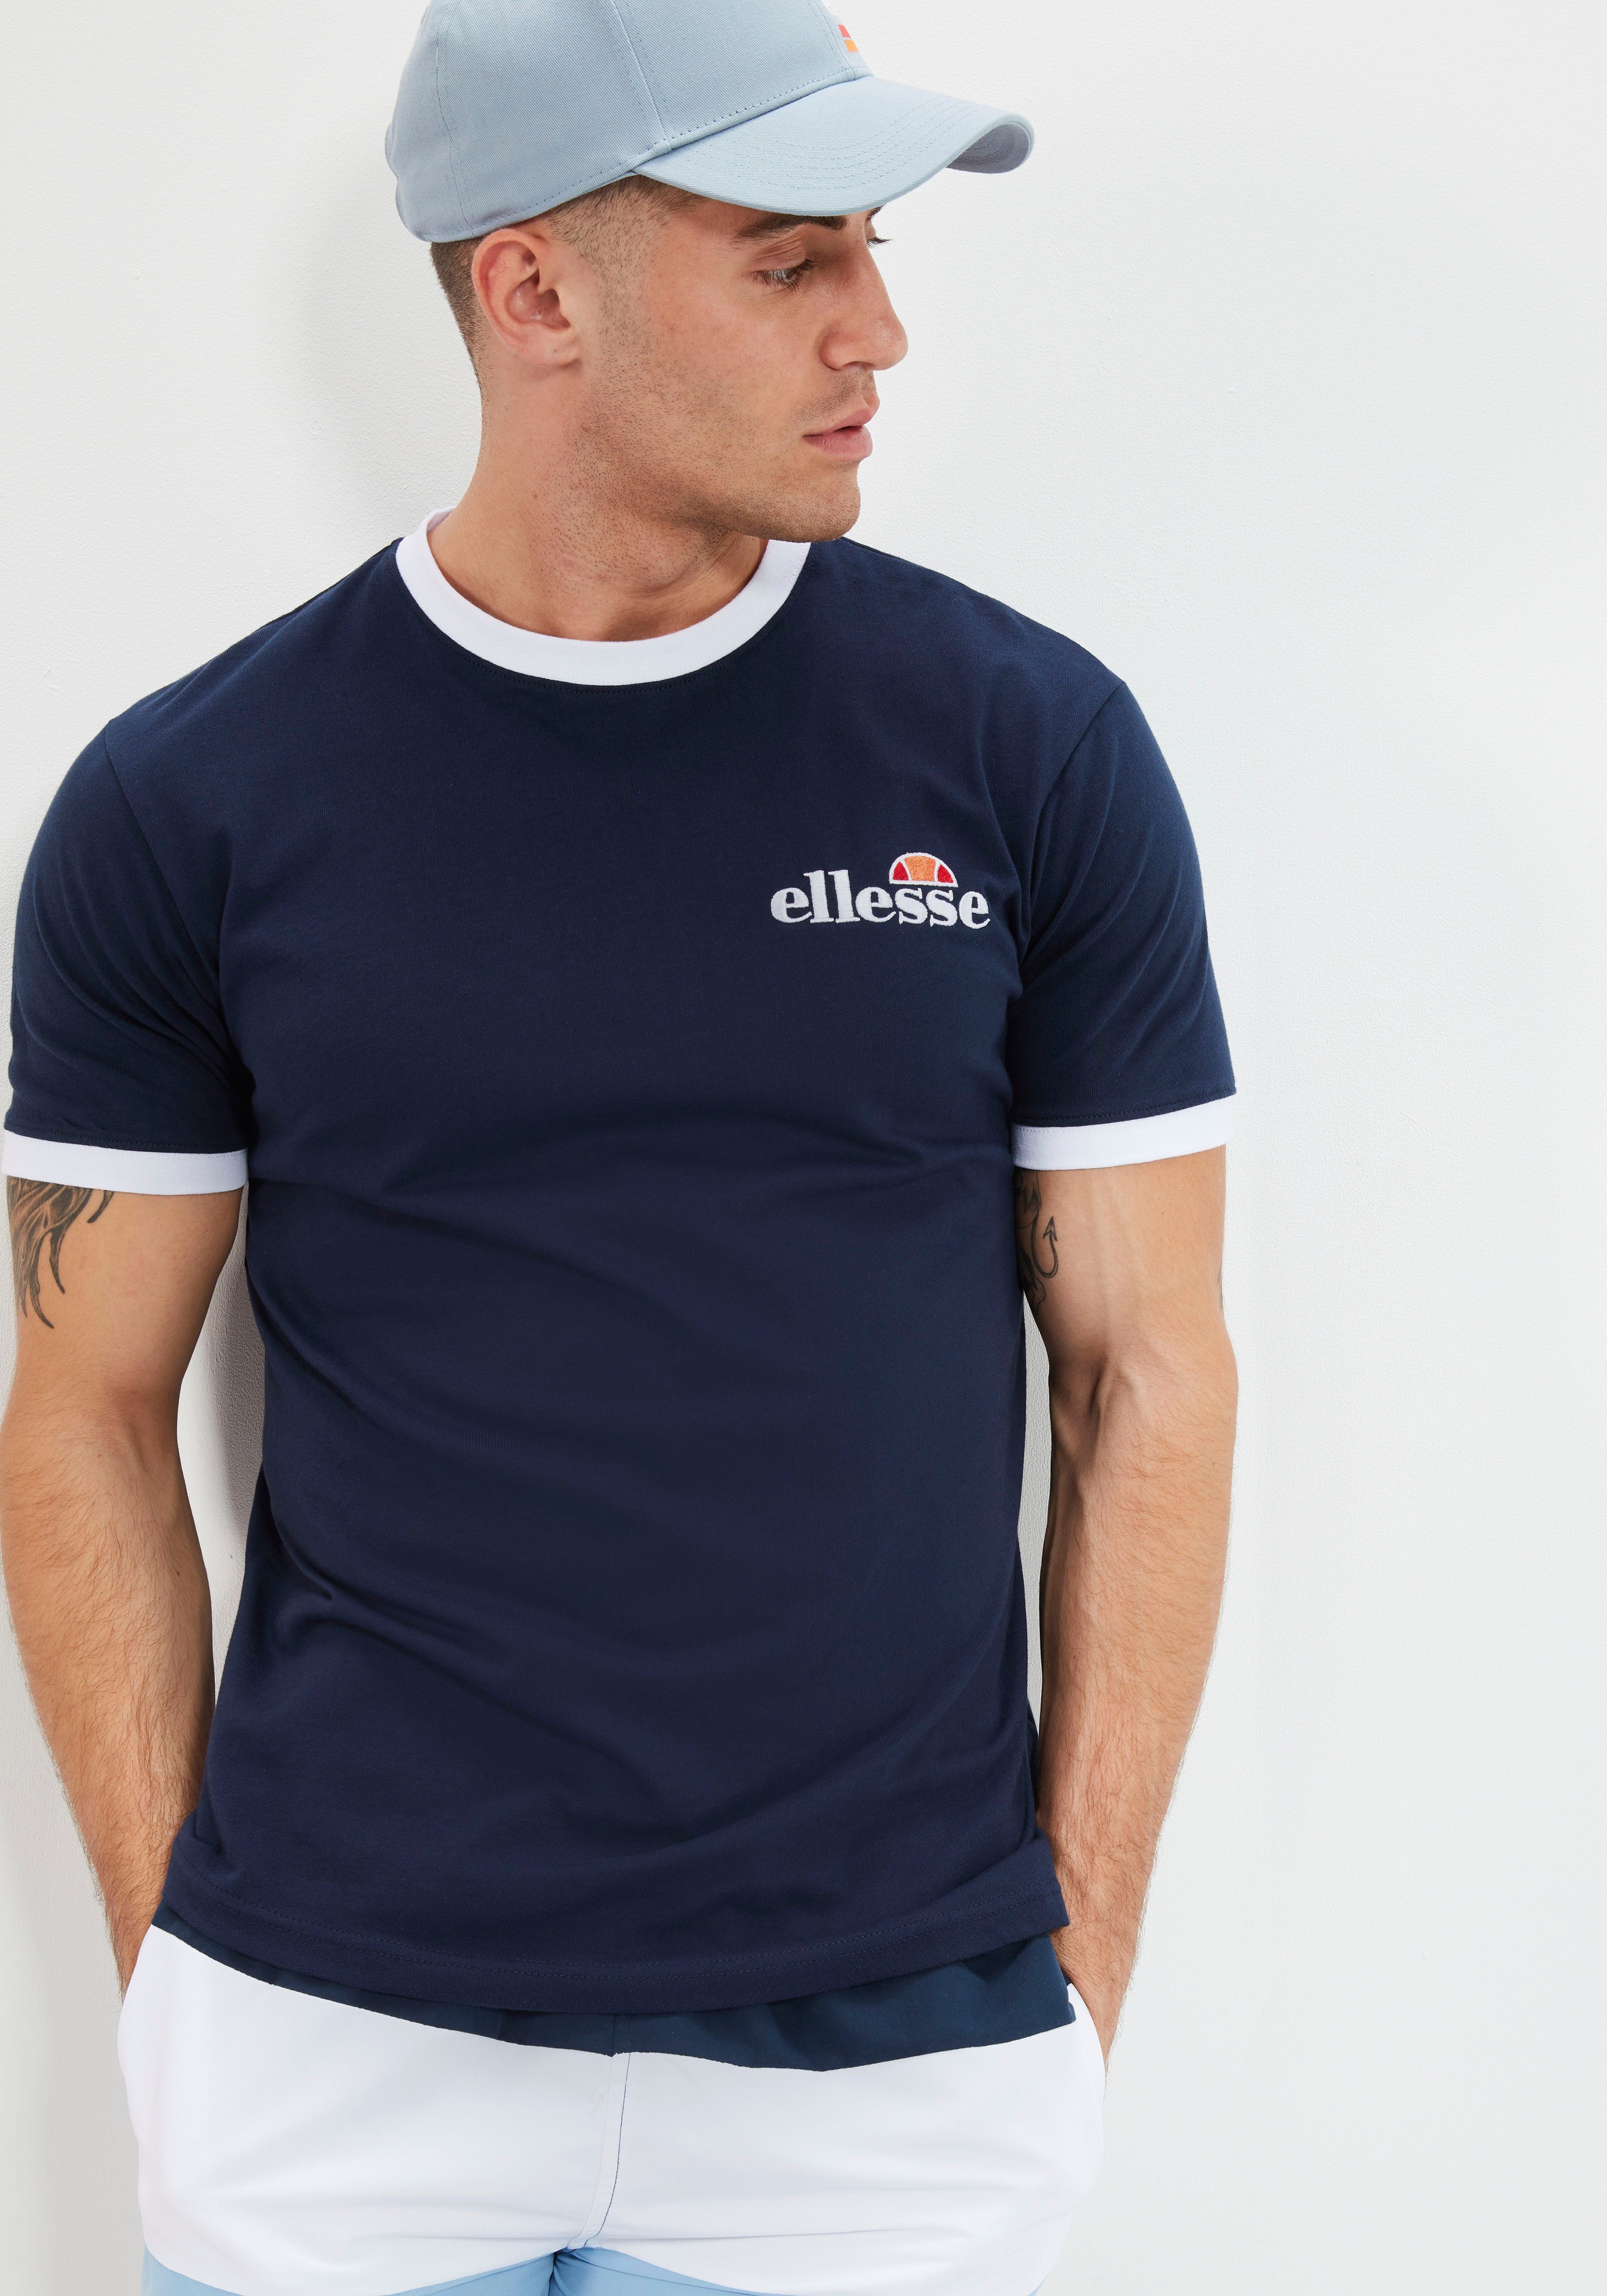 T-Shirt TEE Ellesse MEDUNO Navy